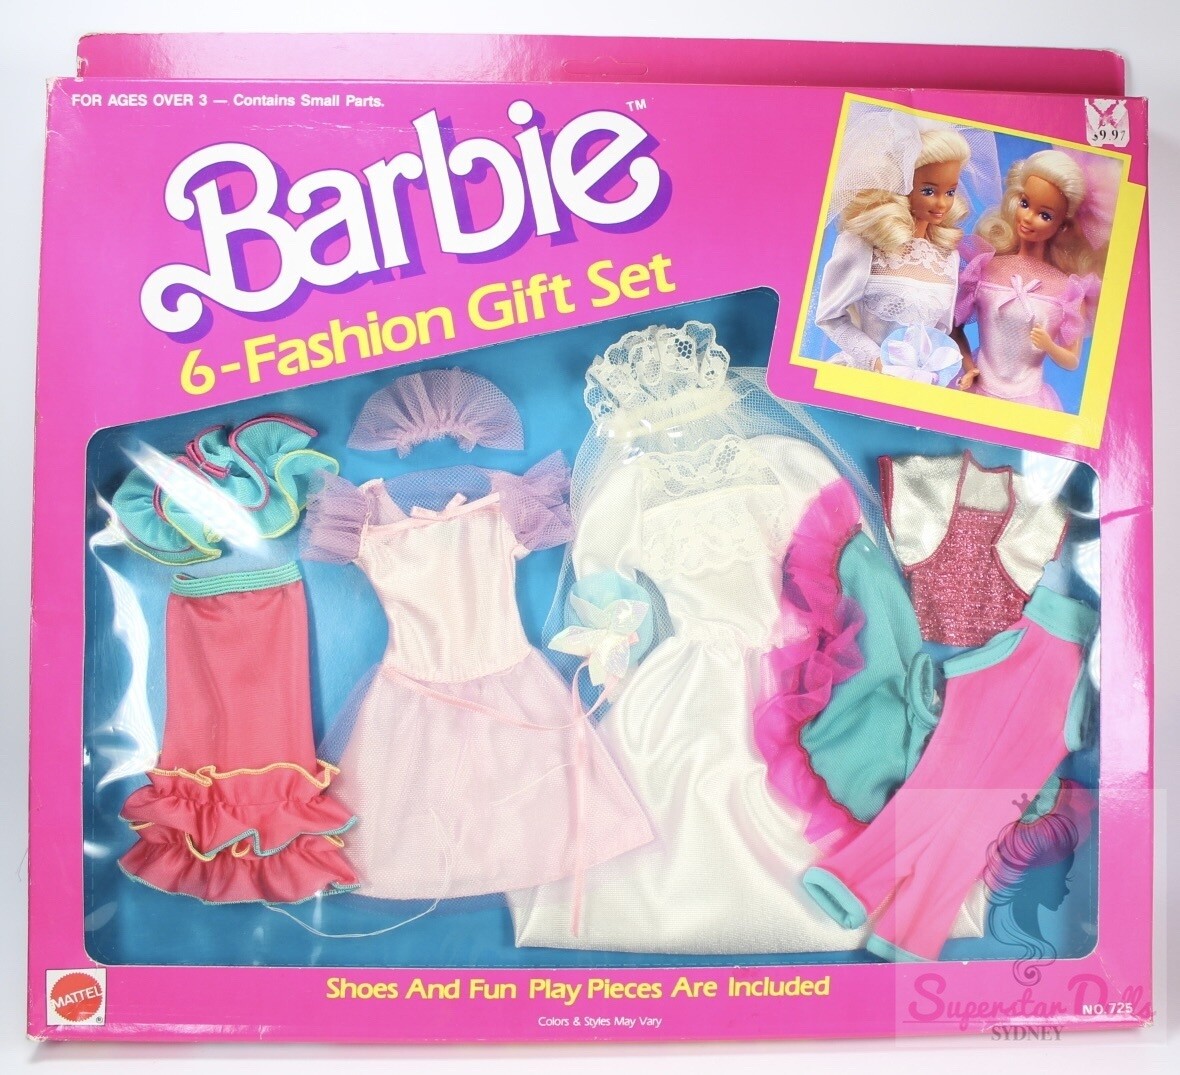 1989 Barbie 6-Fashion Gift Set